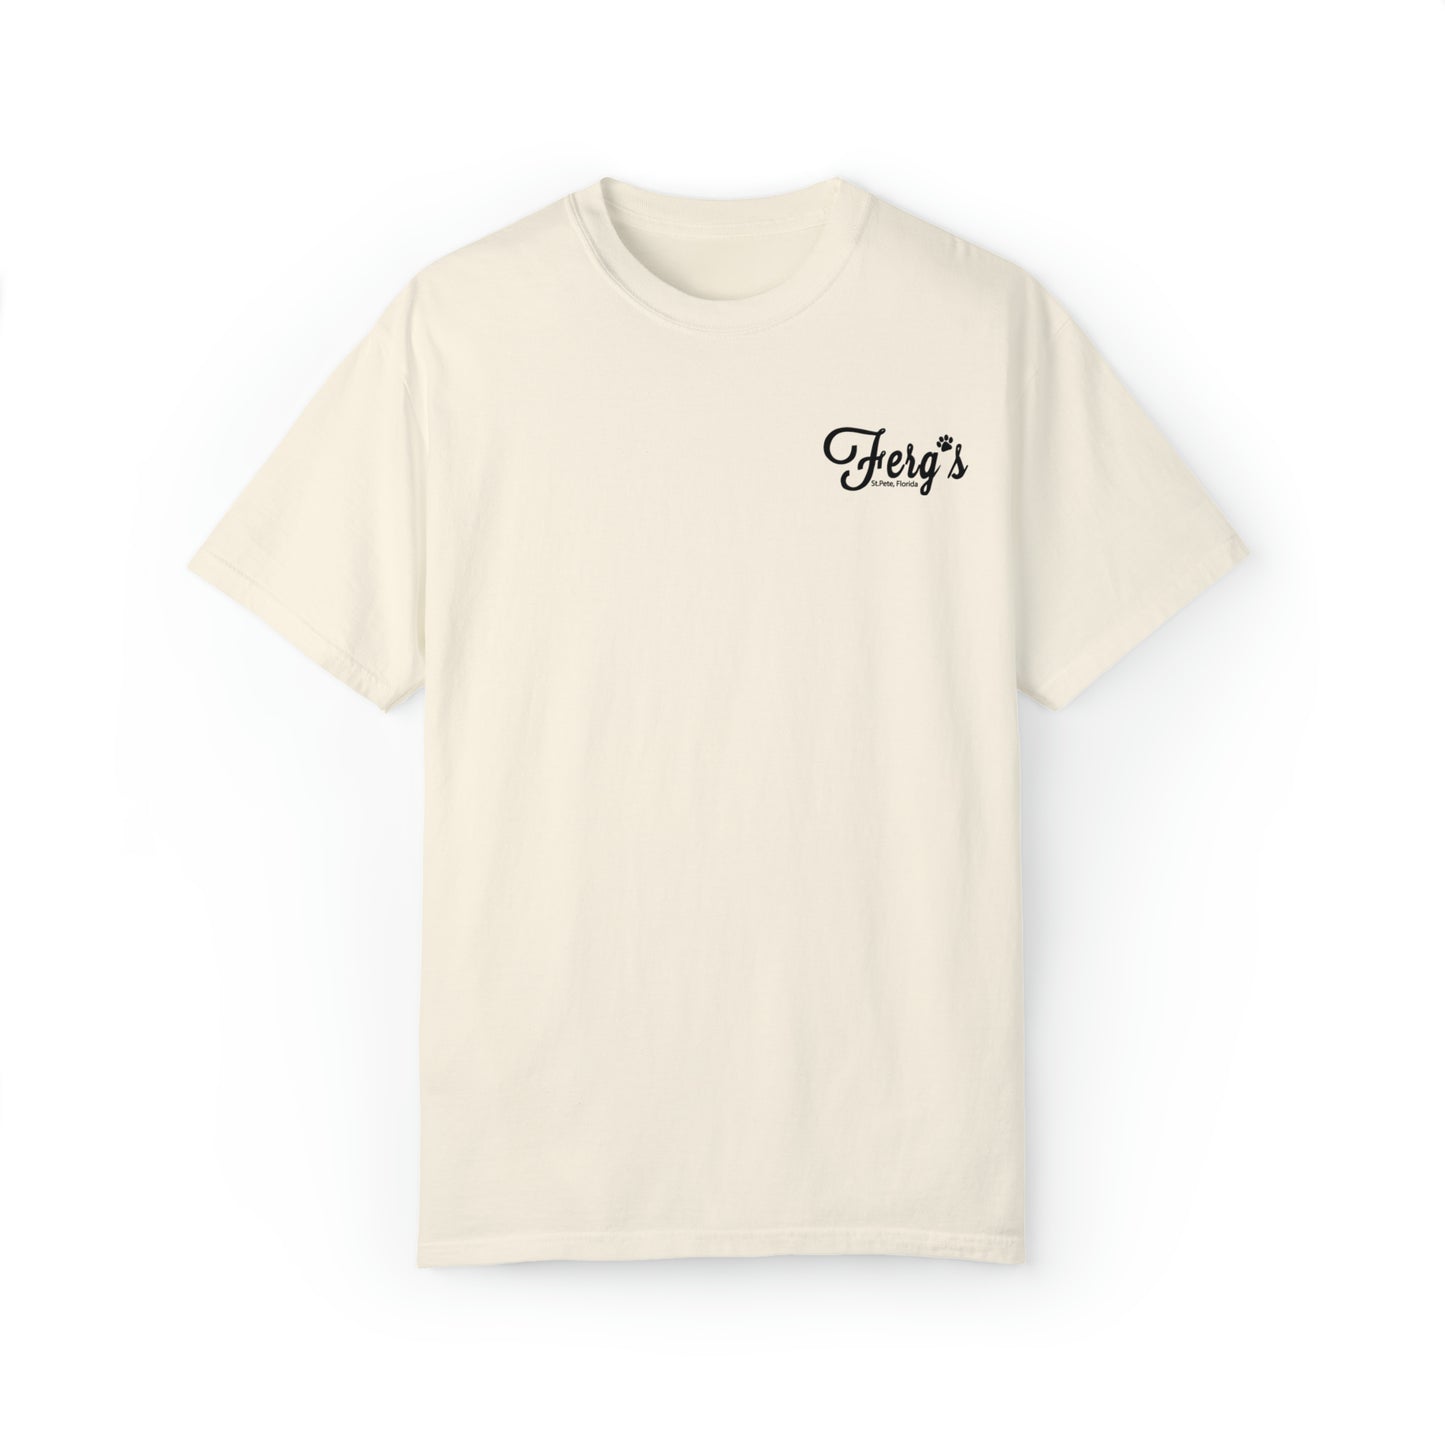 Ferg's Dog Park - Unisex Garment-Dyed T-shirt